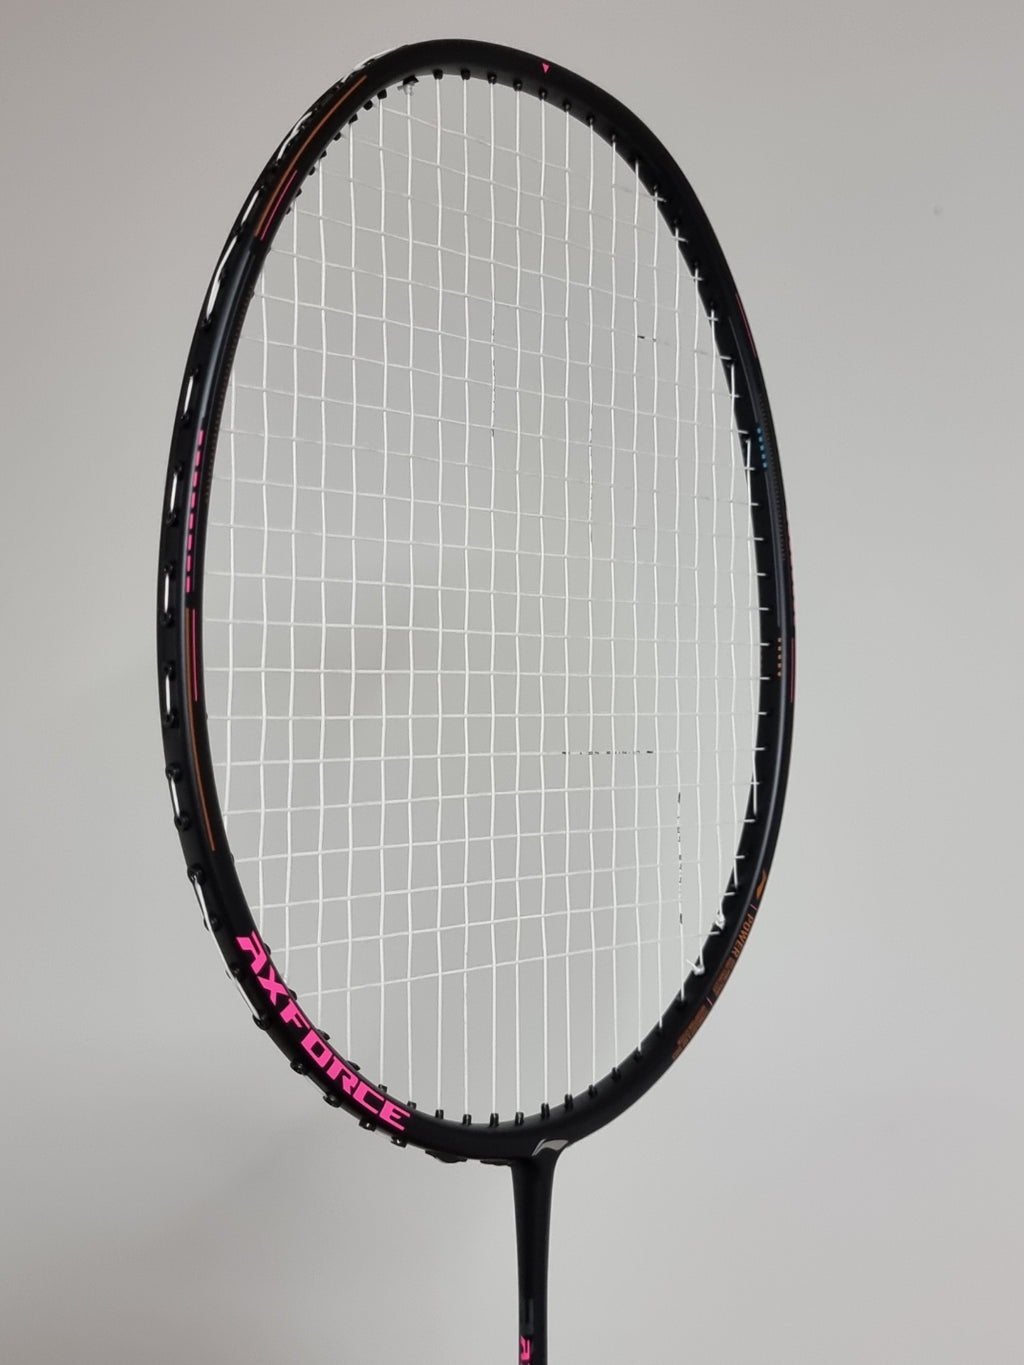 Li-Ning AX Force 80 4u Badminton Racket badminton racket review